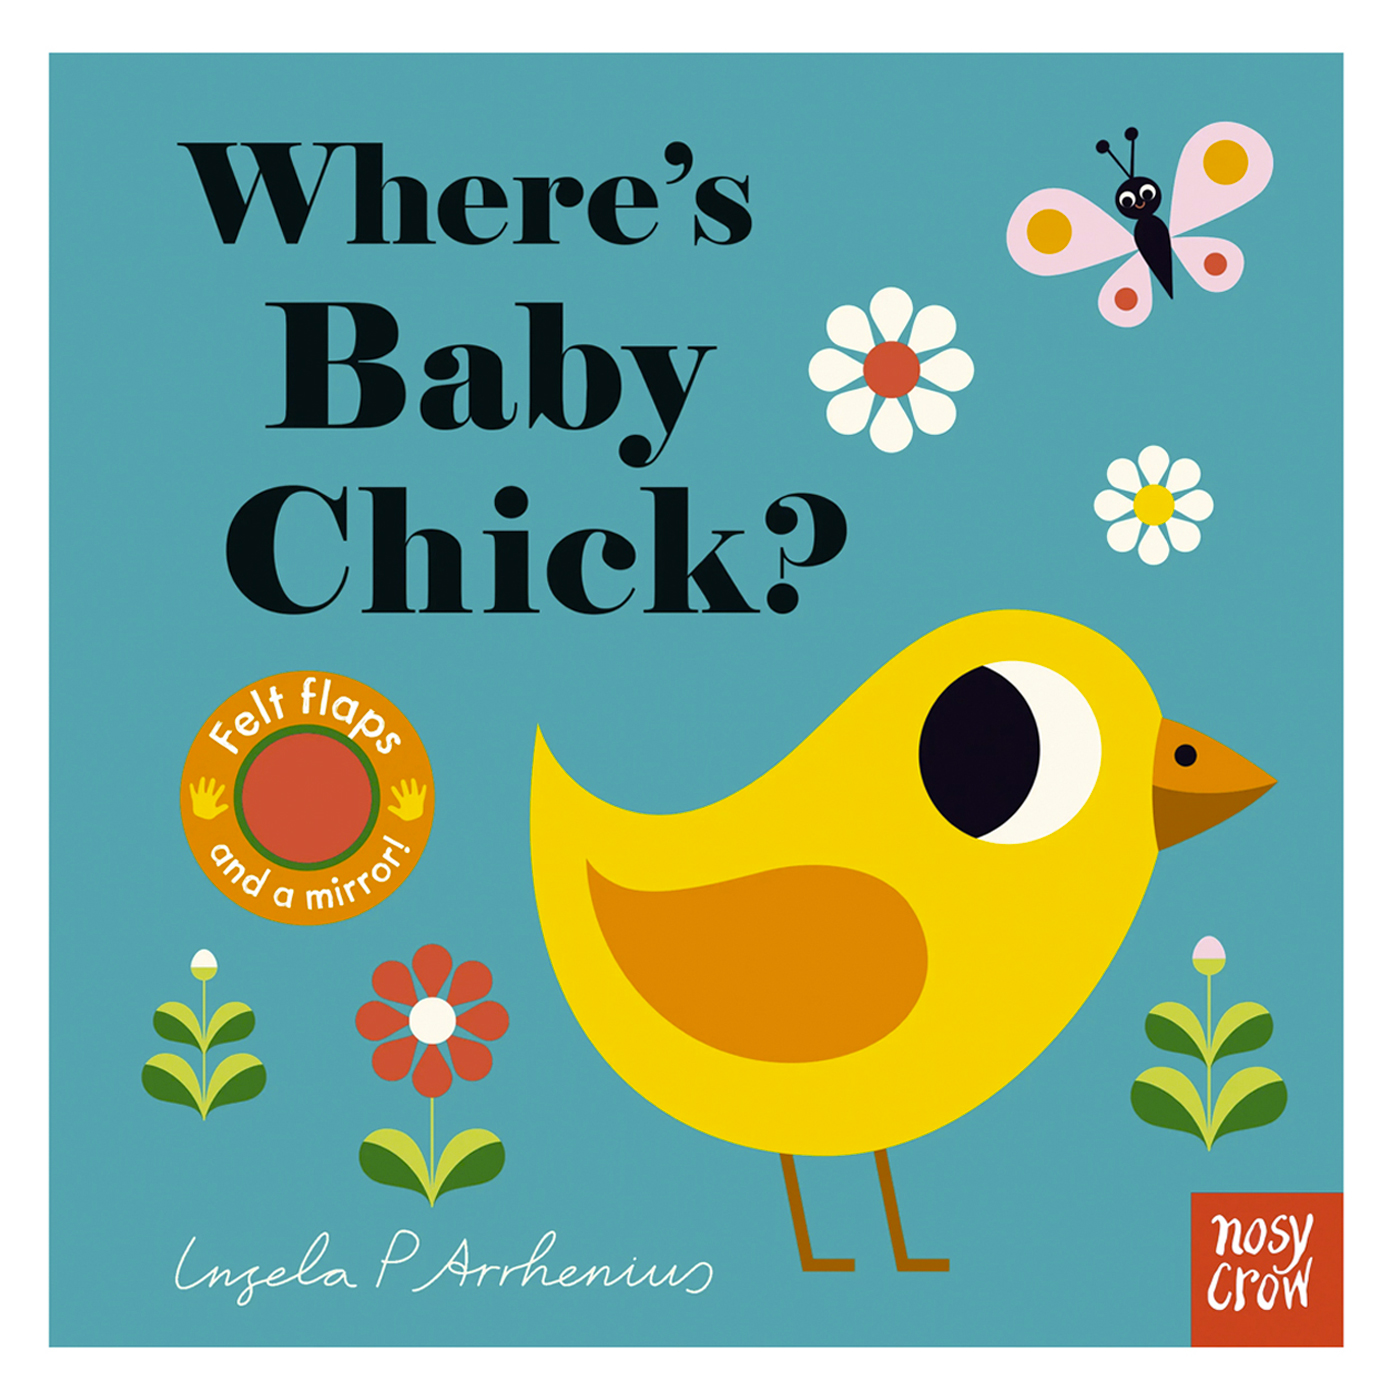  Where's Baby Chick?